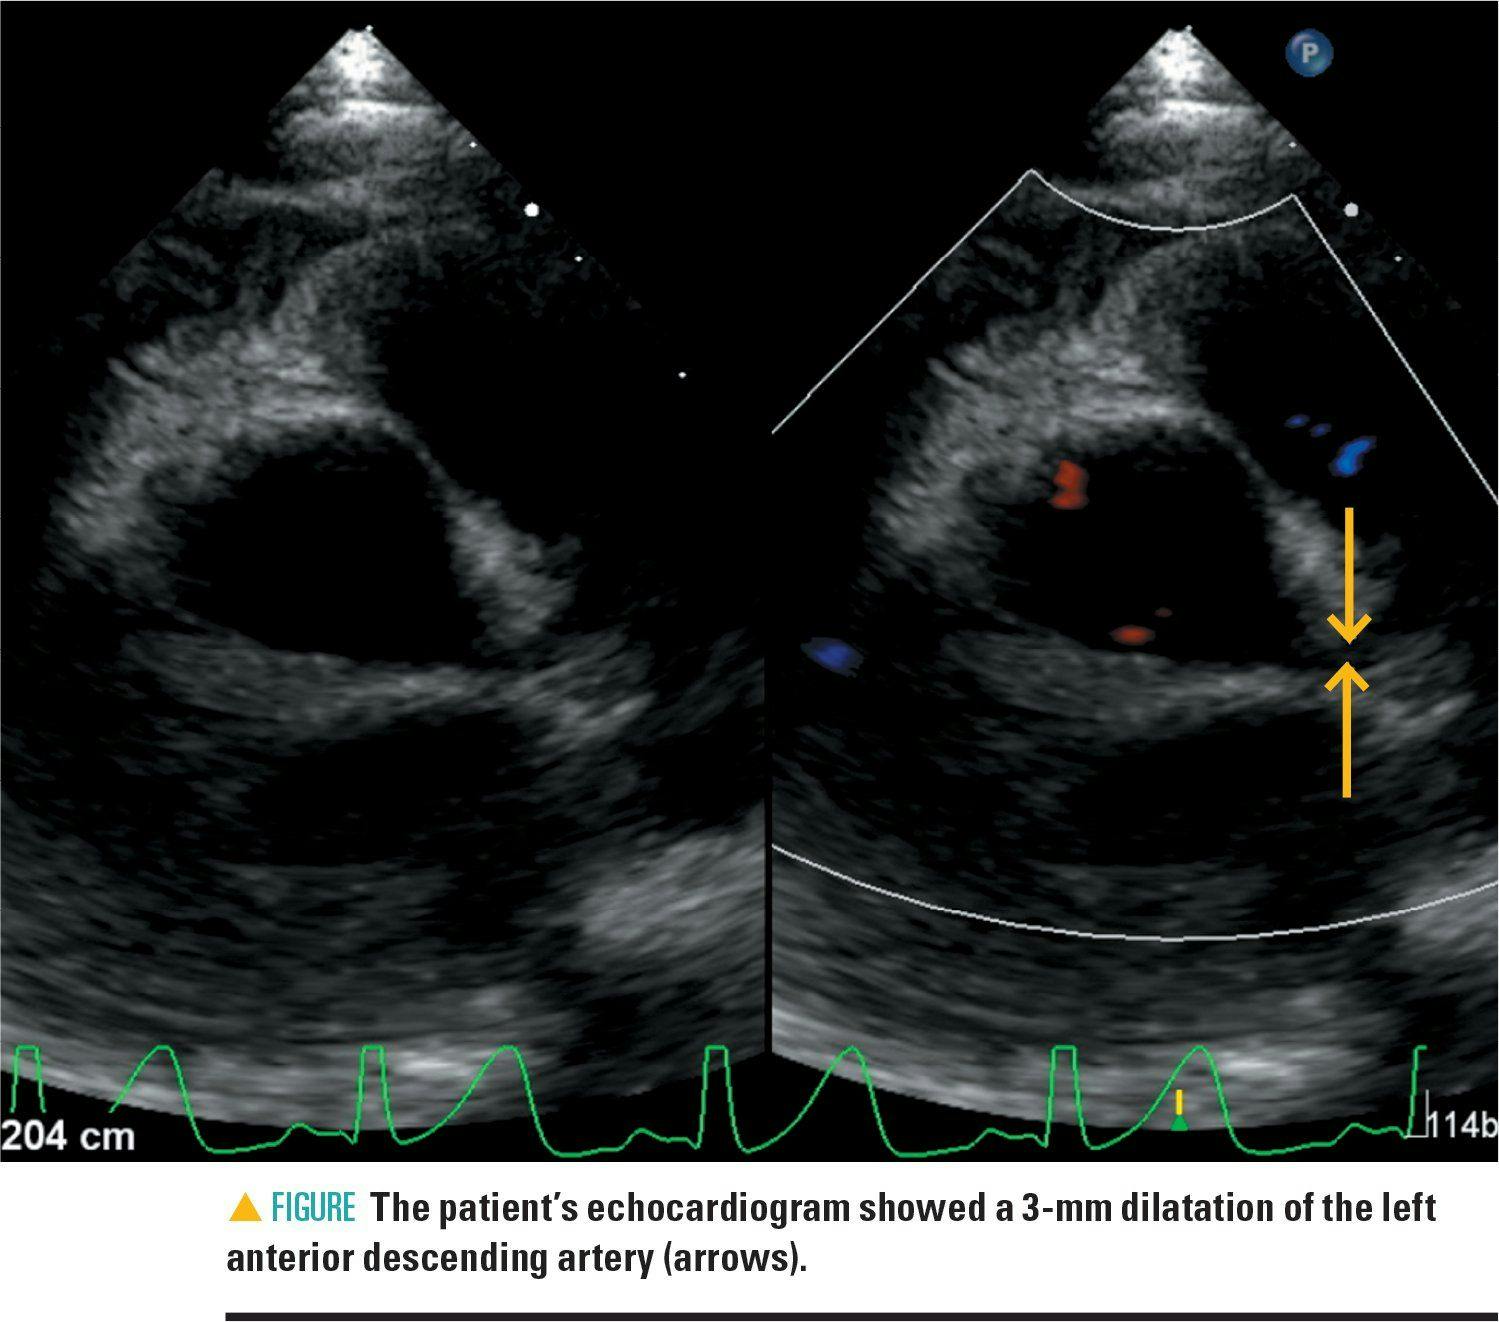 Patient's echocardiogram shows a 3-mm dilation of the left anterior descending artery